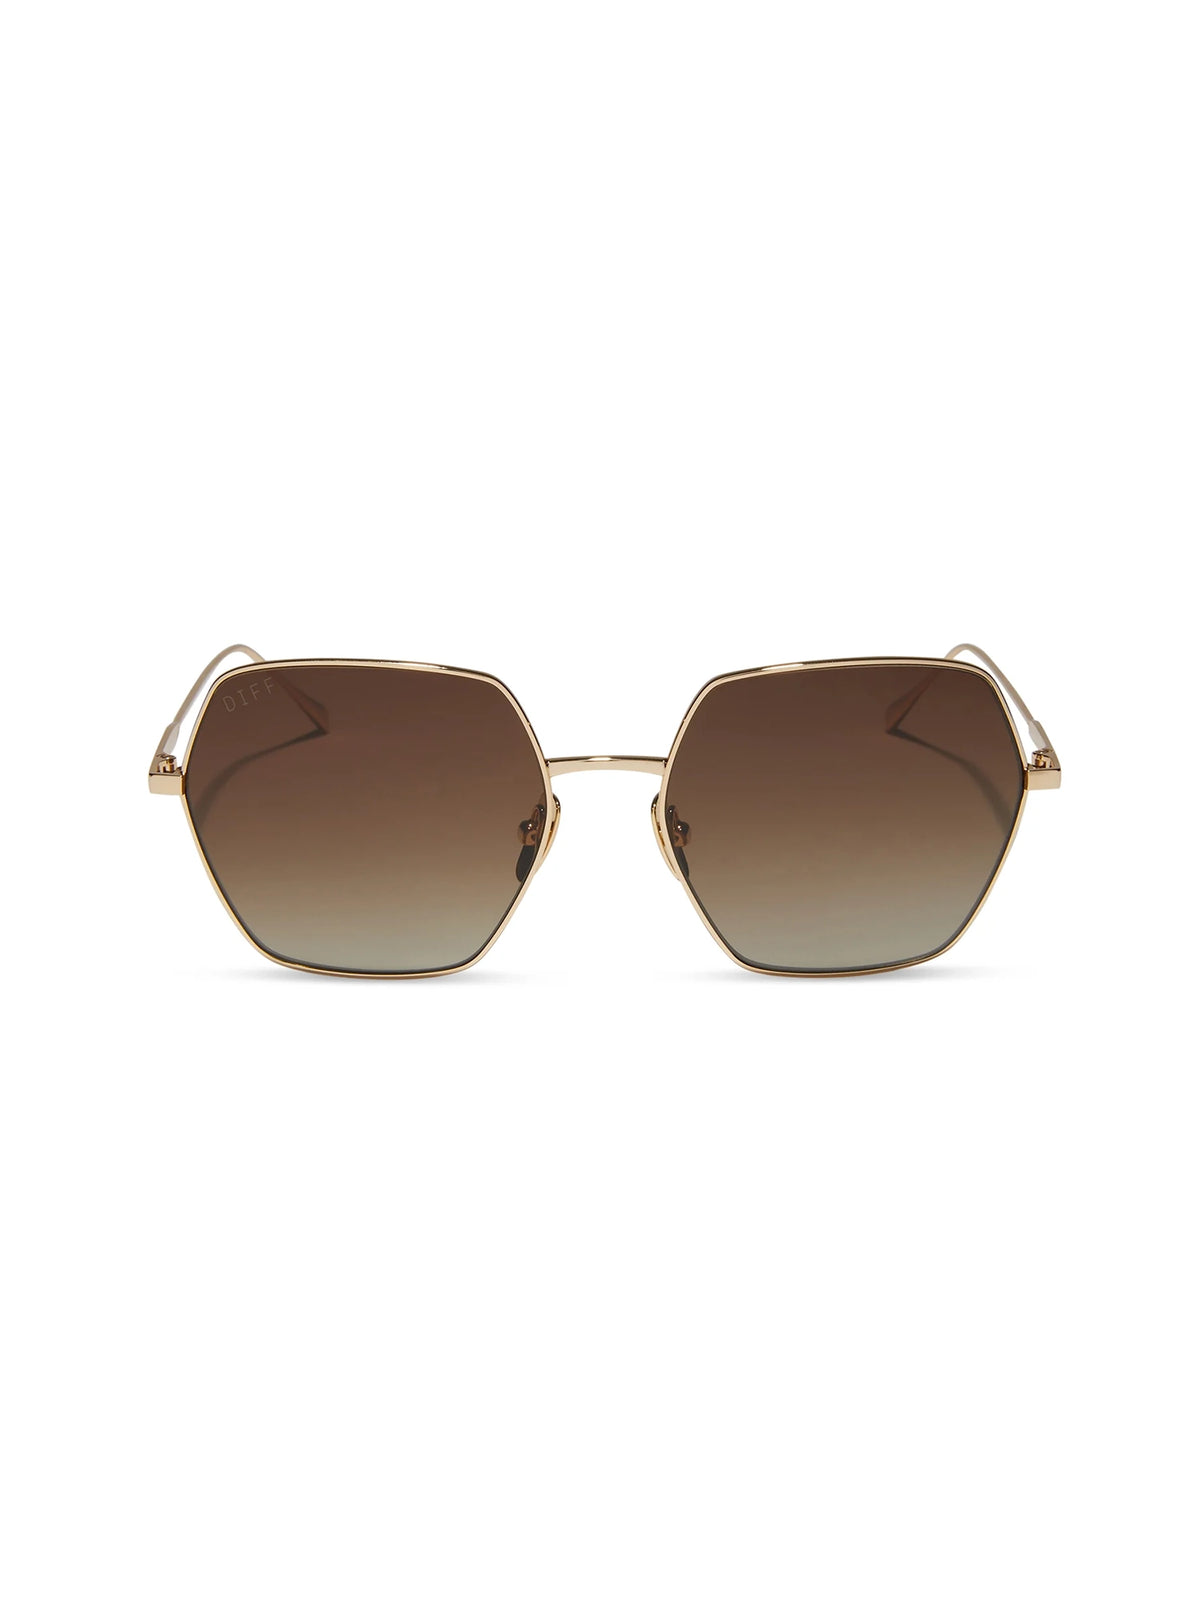 diff eyewear harlowe sunglasses in gold brown gradient polarized